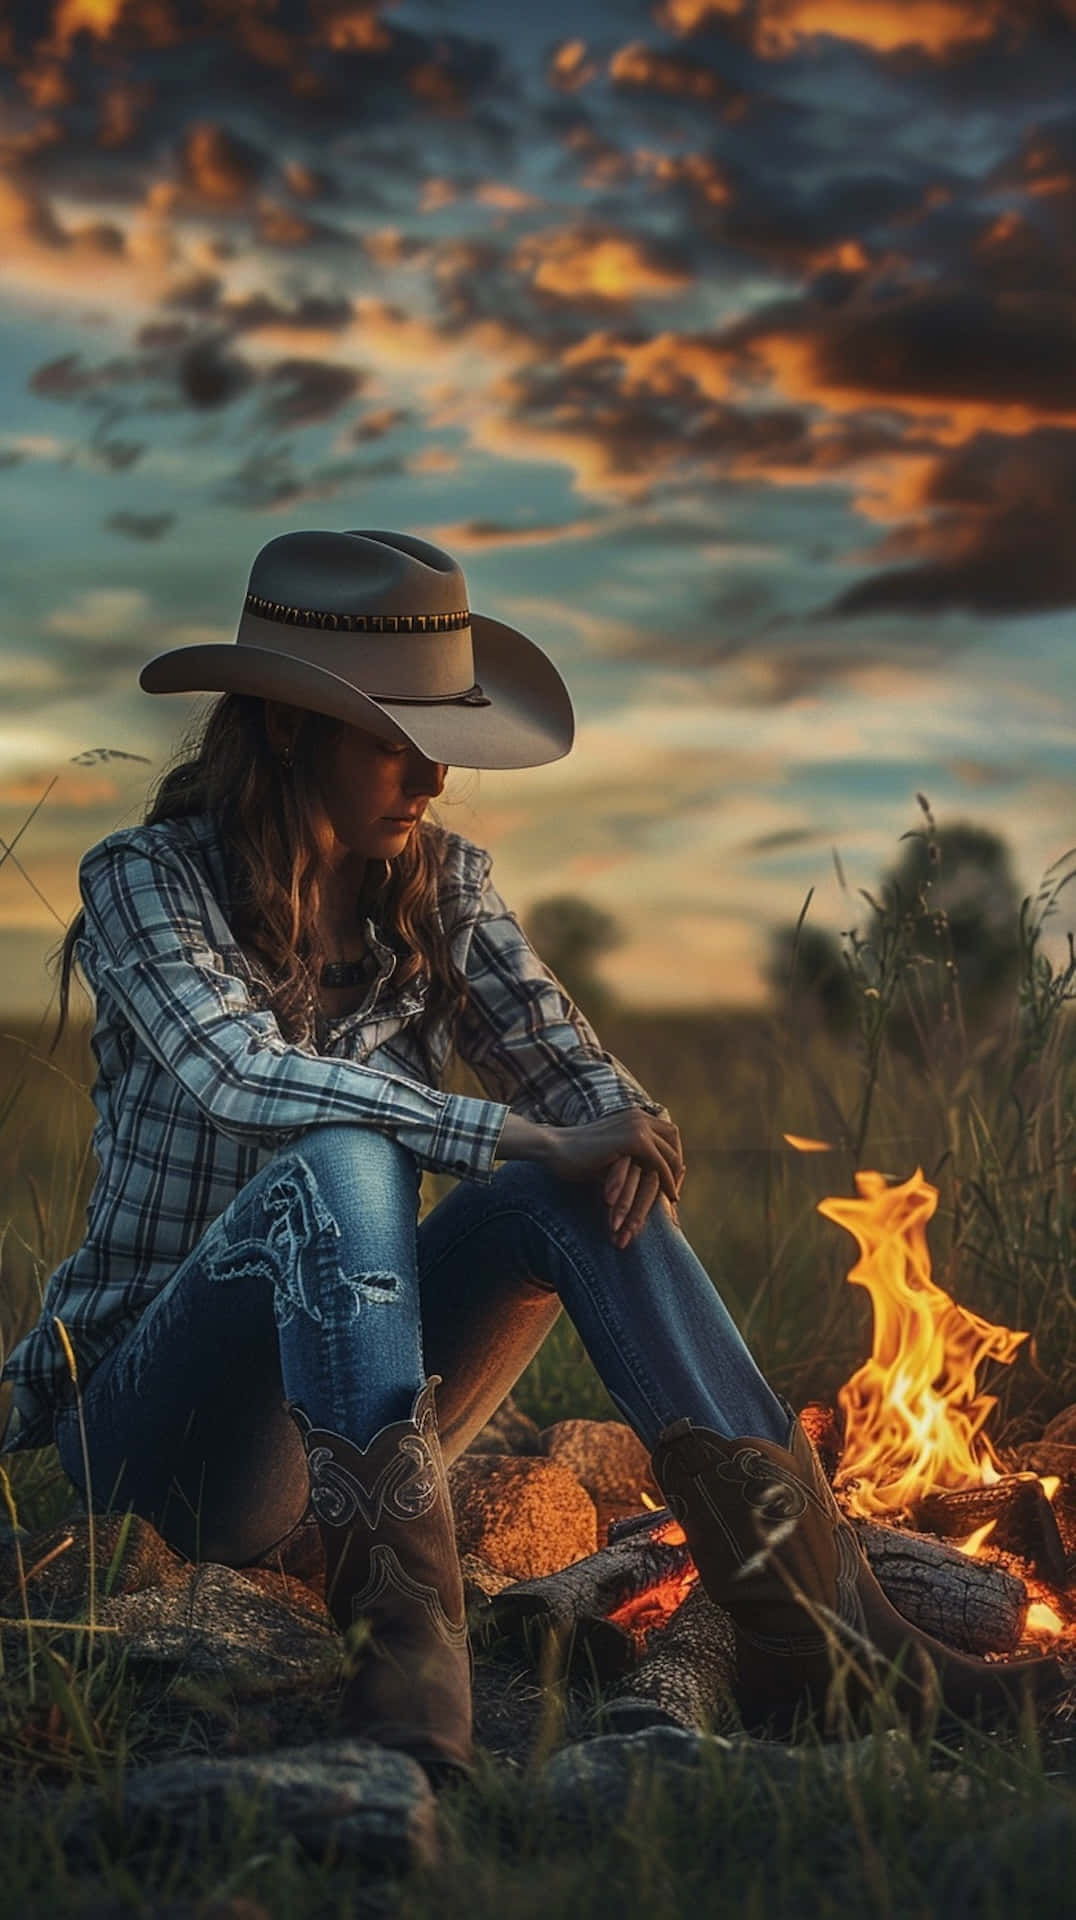 Cowgirl Sunset Campfire Aesthetic.jpg Wallpaper